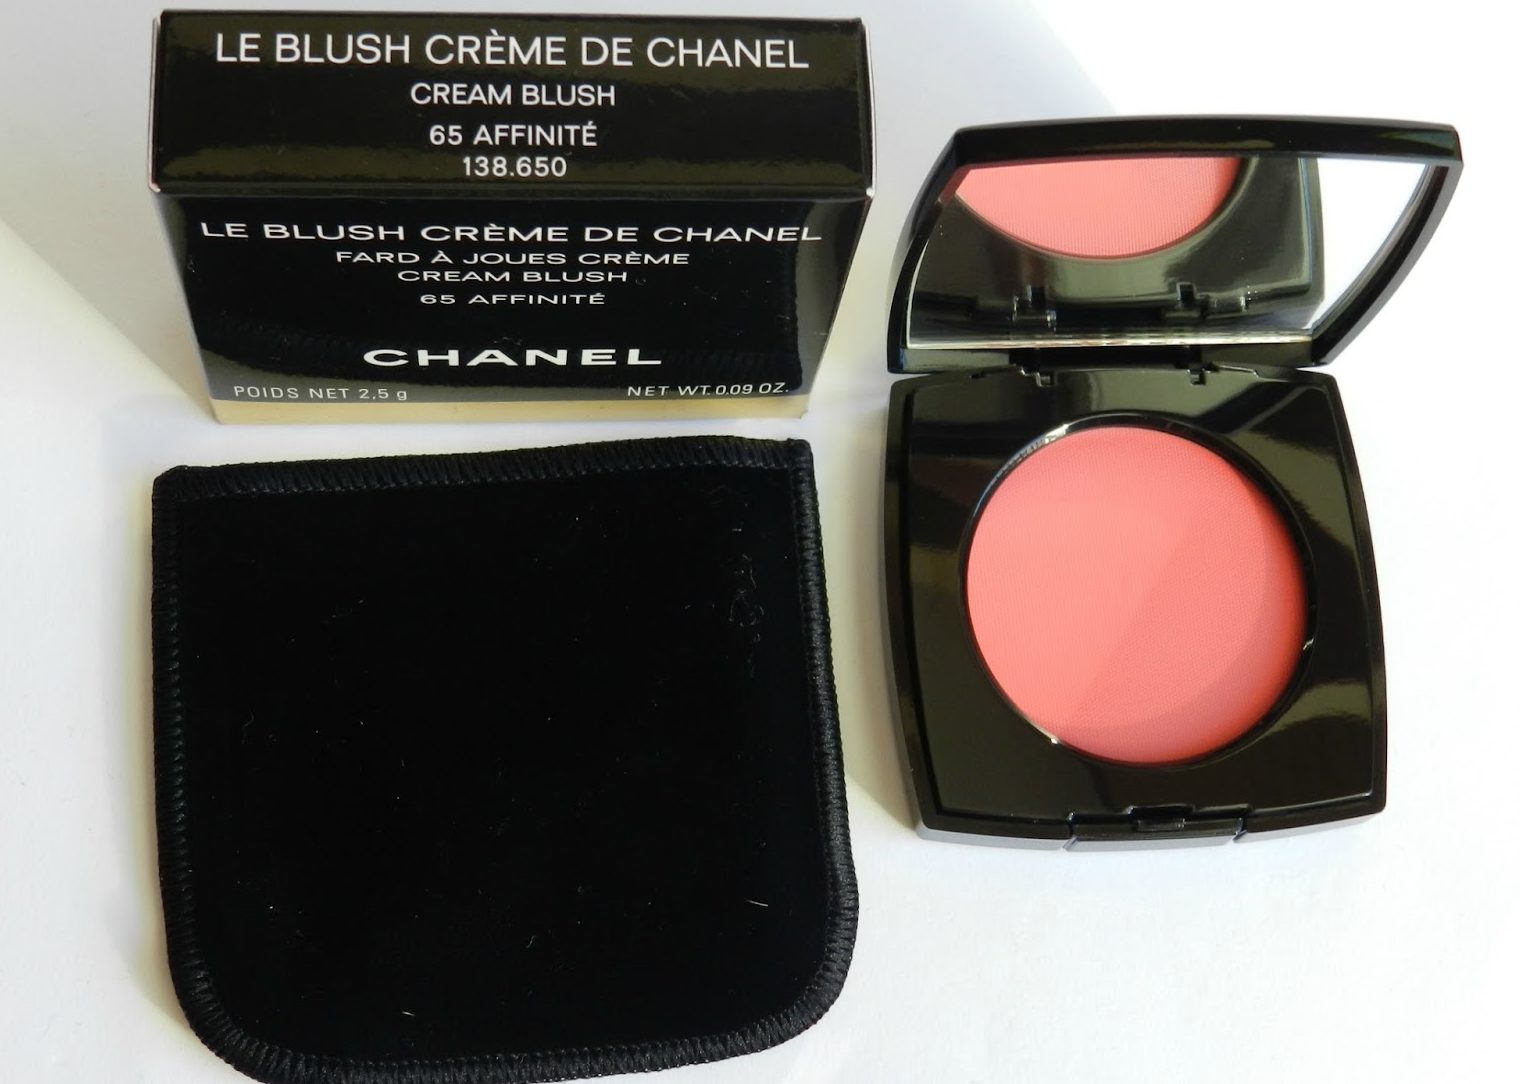 Le Cream Blush by Chanel